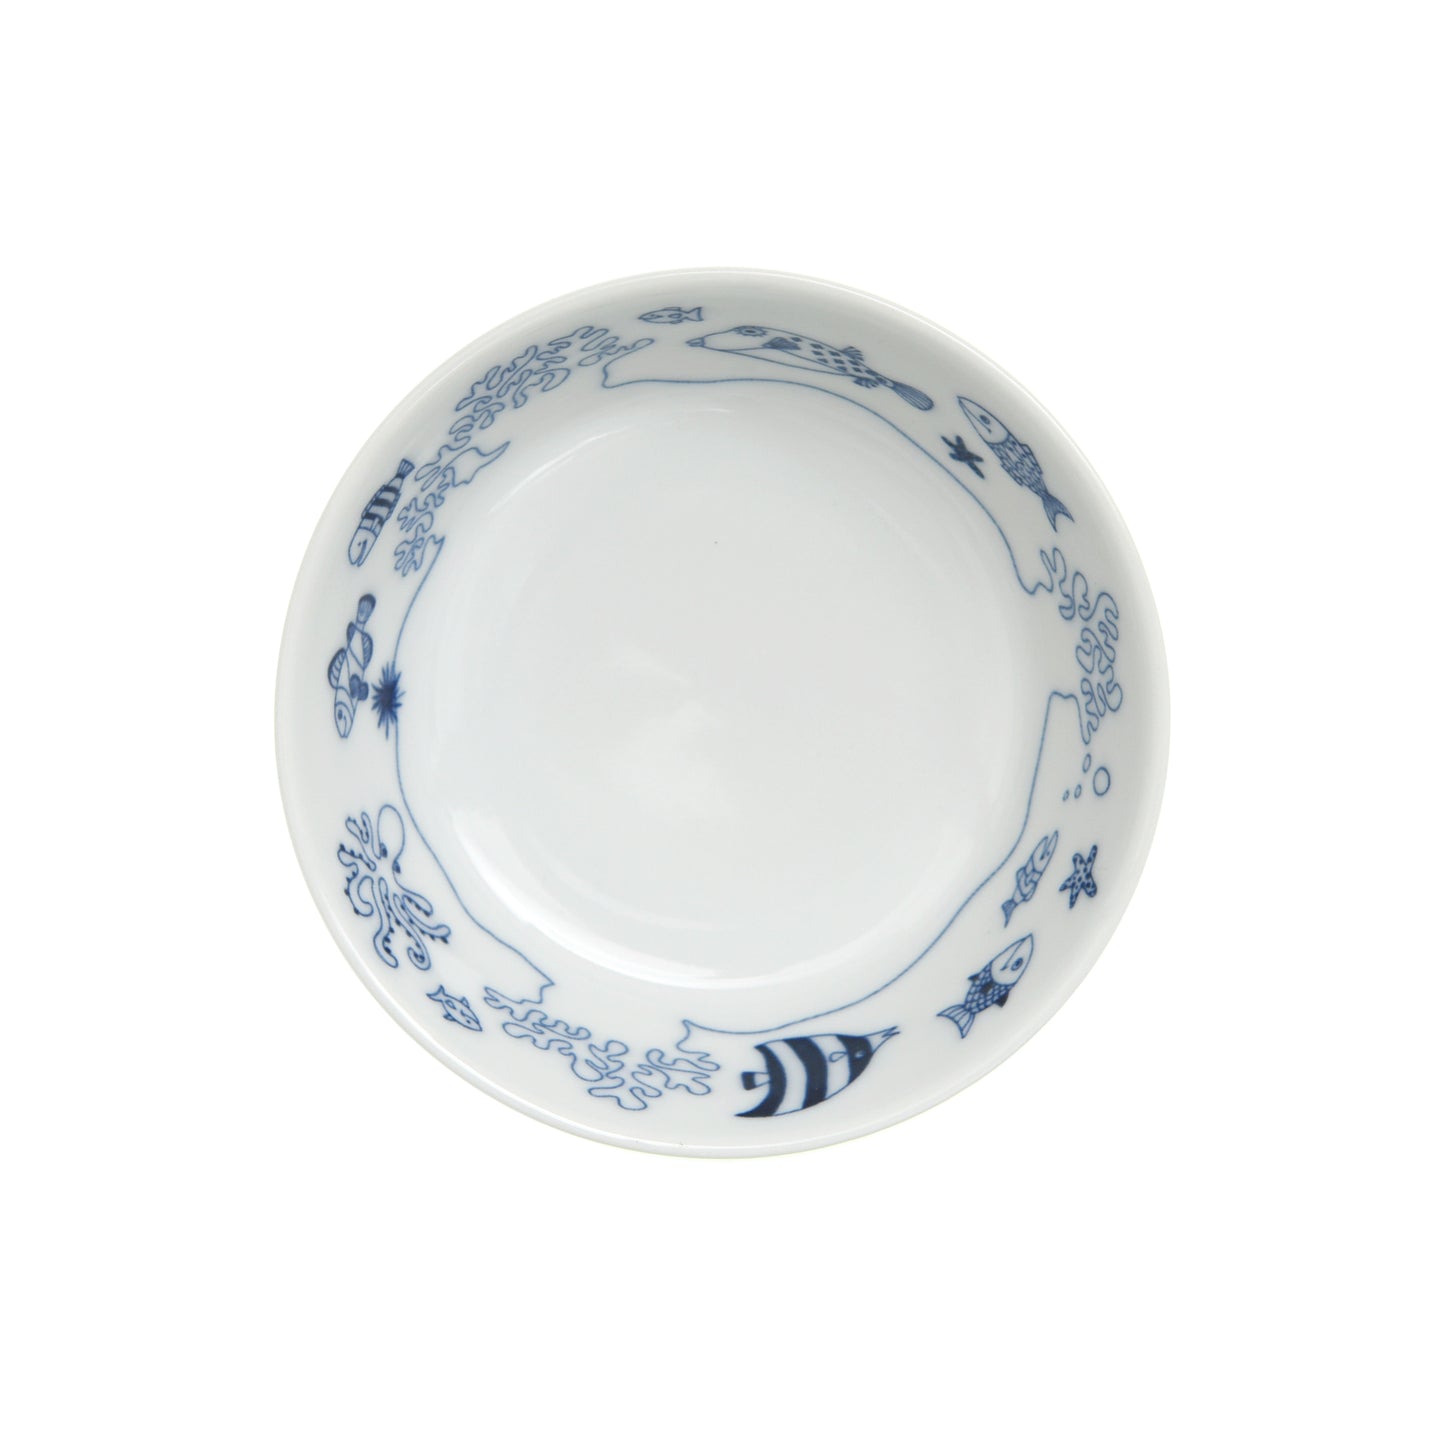 [Hasami ware] [natural69] [Cocomarine] [cocomarine] [Bowl S] 小餐具北欧时尚海洋生物水族箱